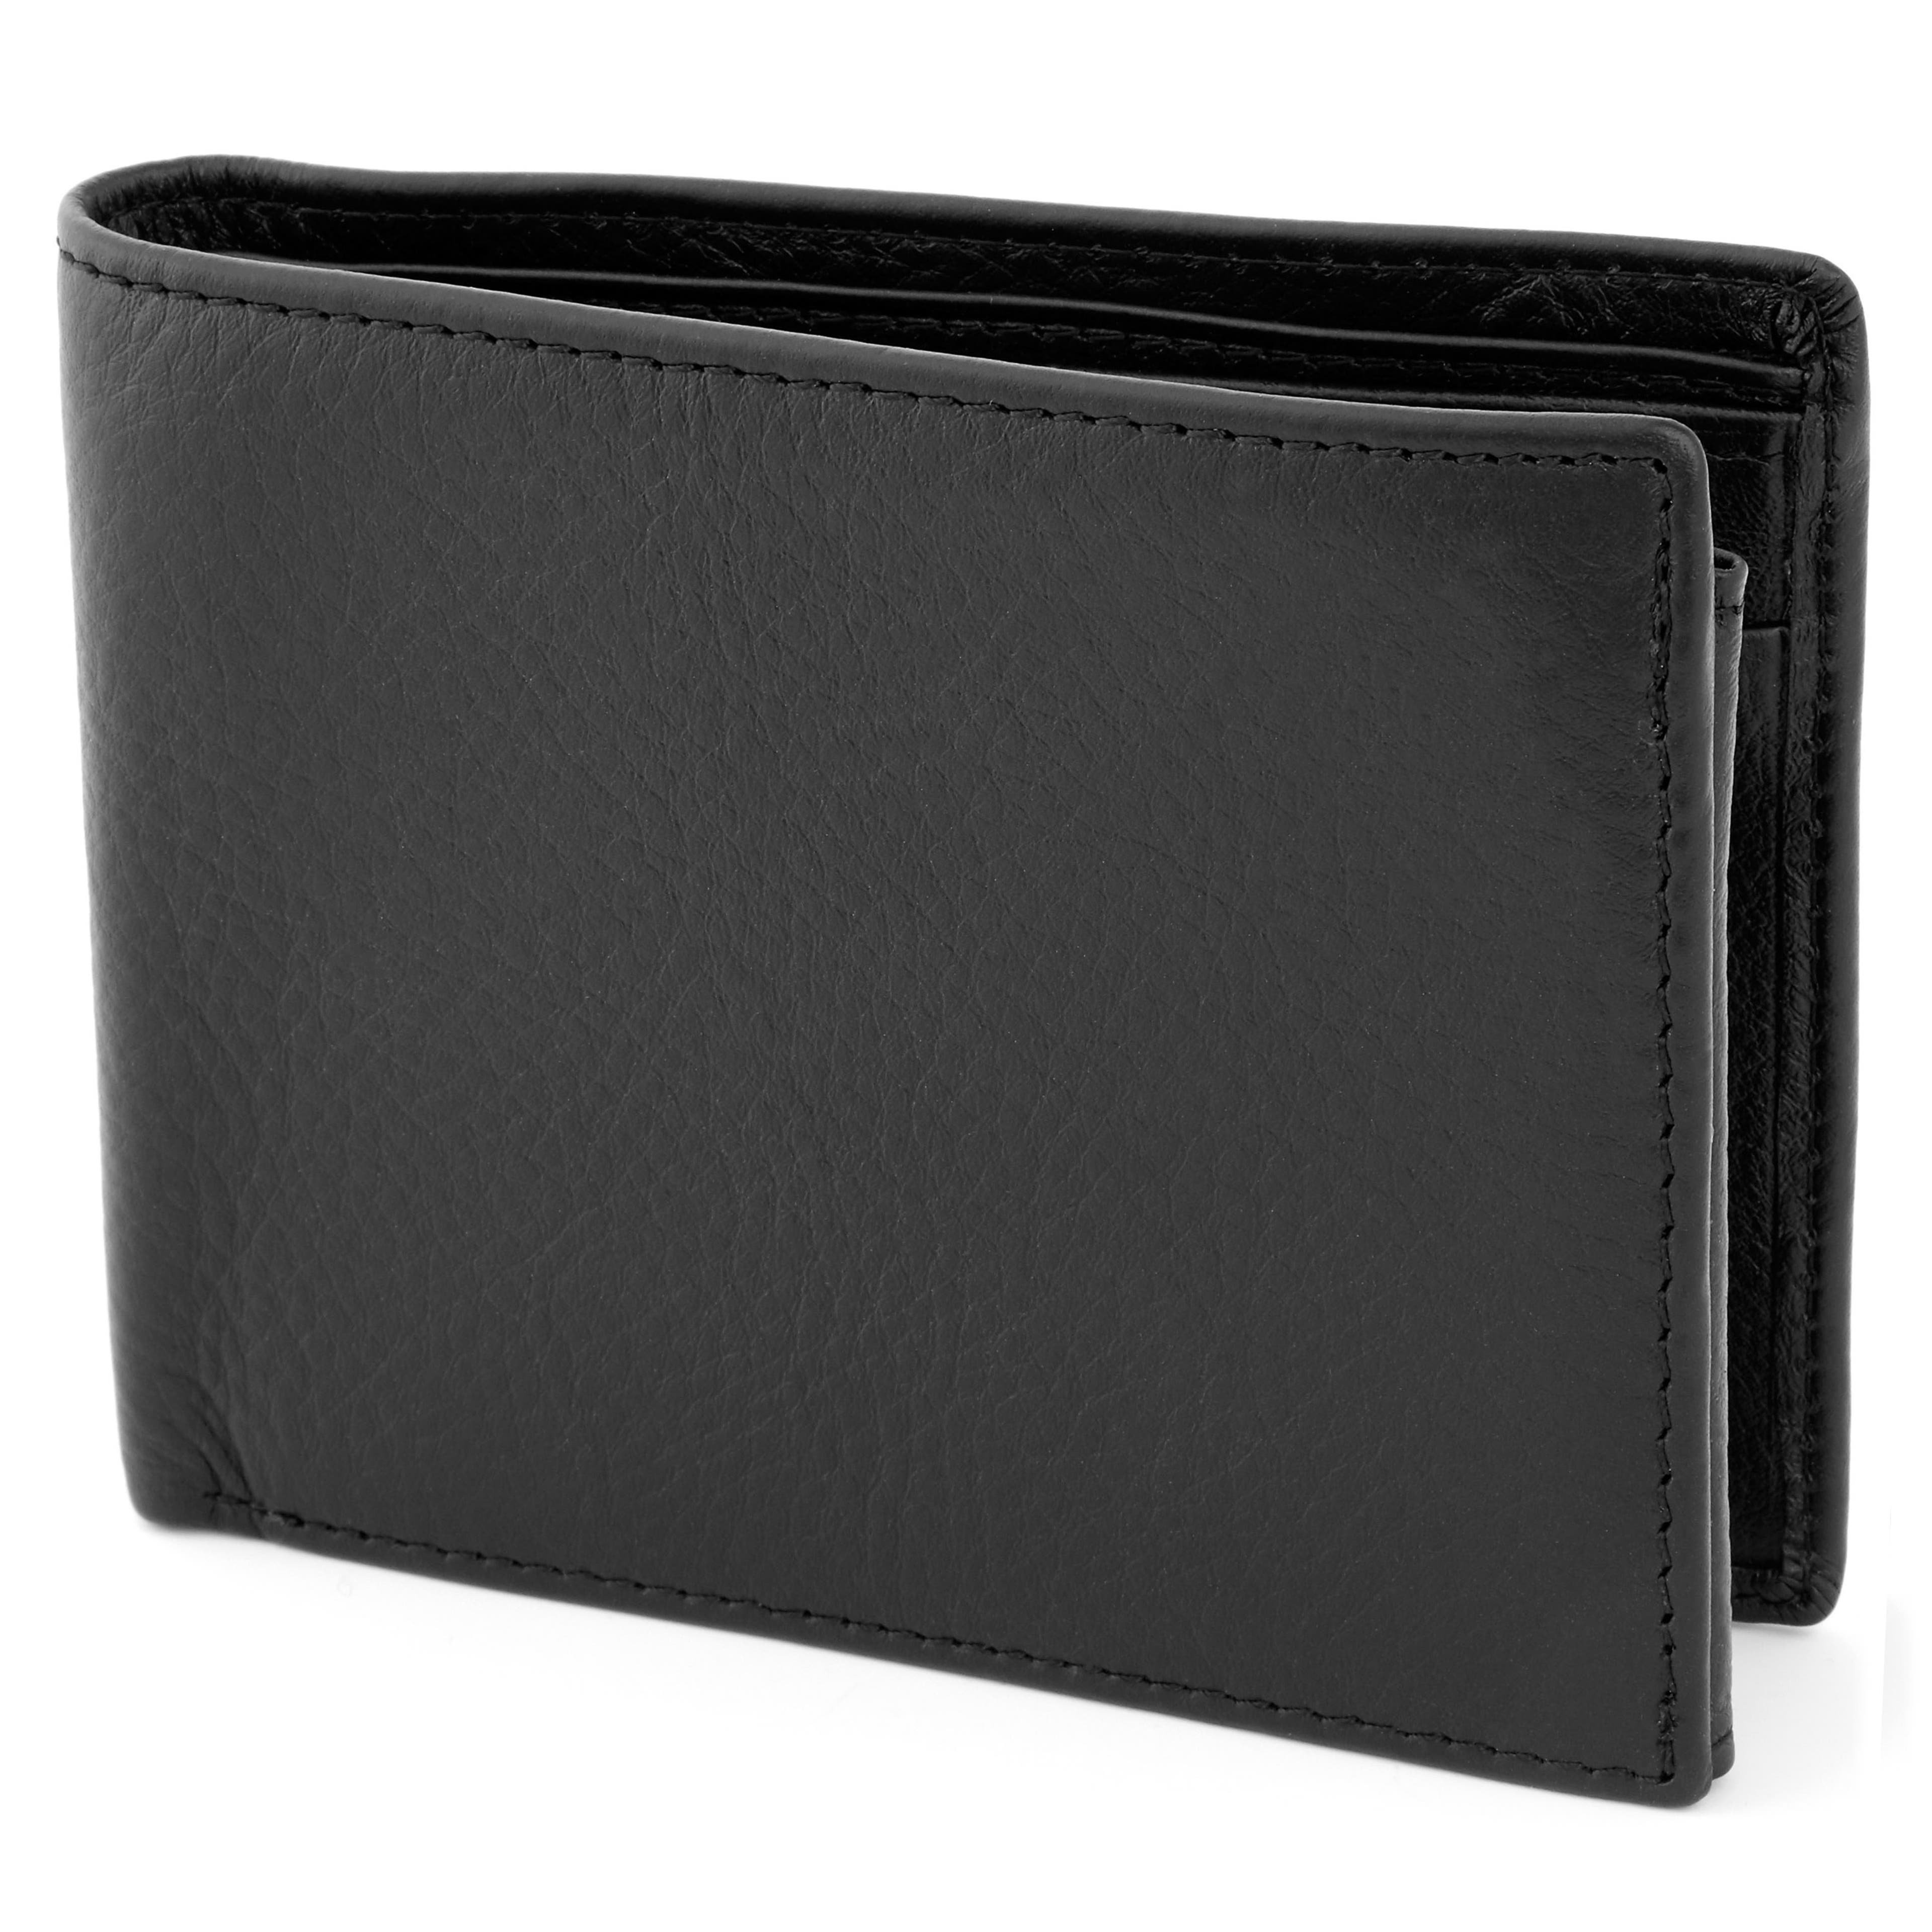 Secure Black Leather Wallet